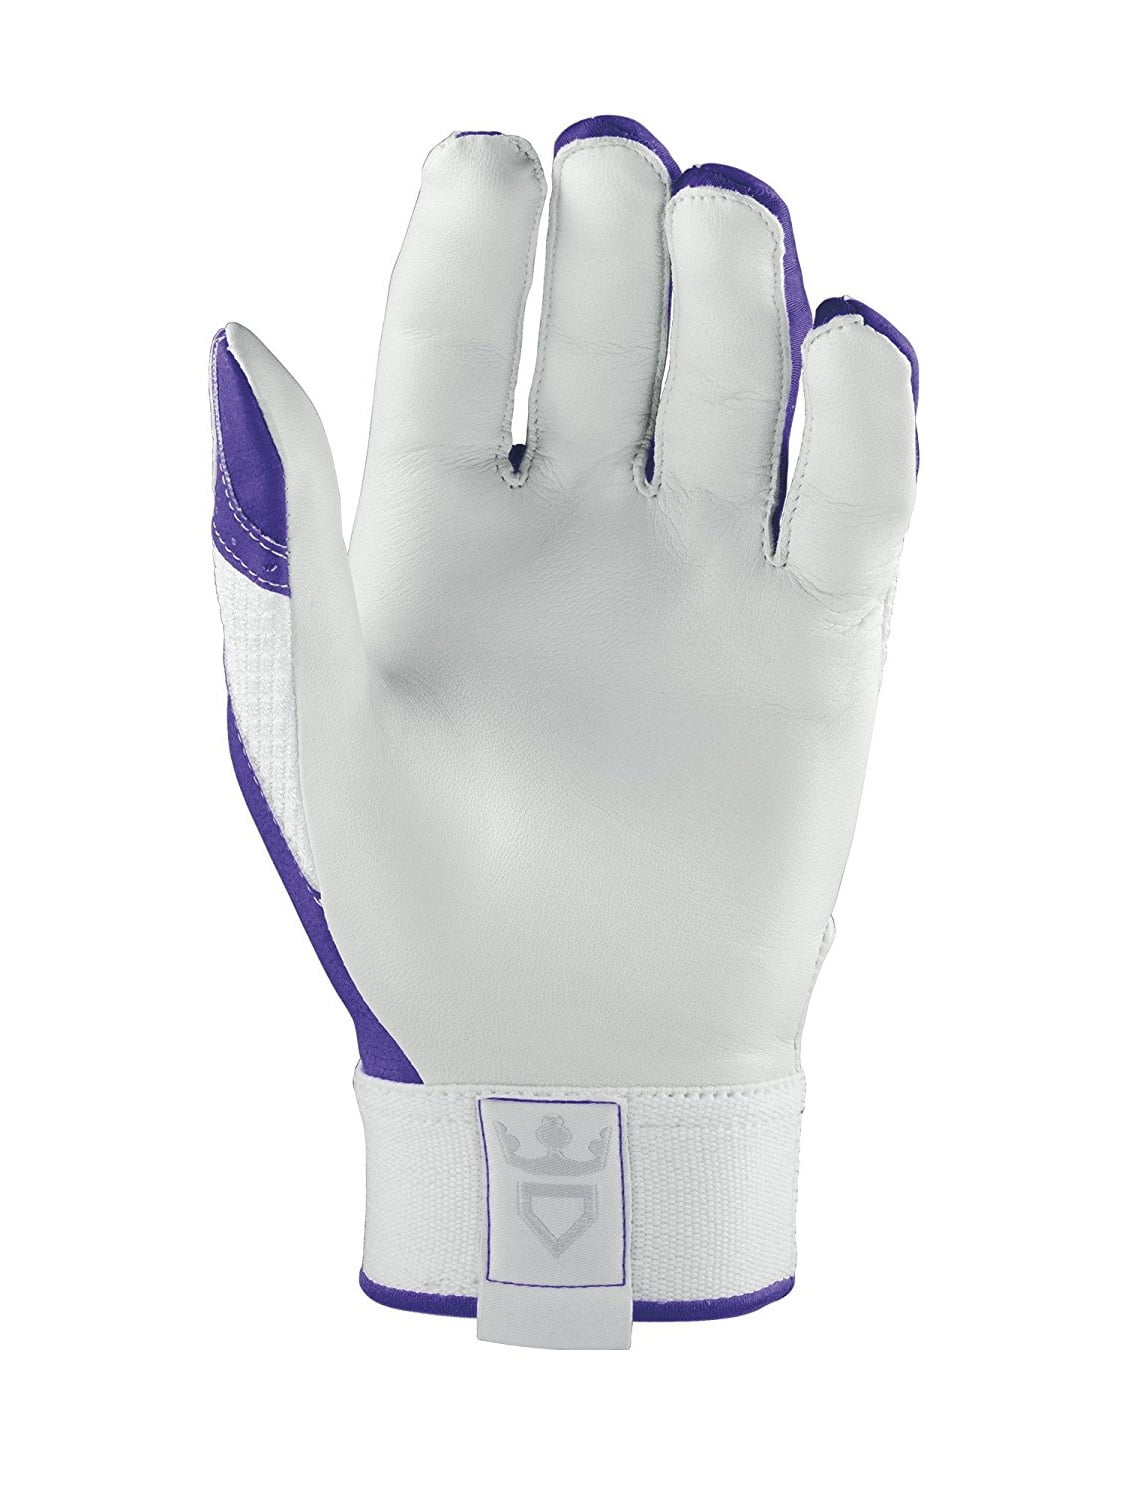 DeMarini Phantom Men's Baseball/Softball Batting Gloves Purple/White Size Large 